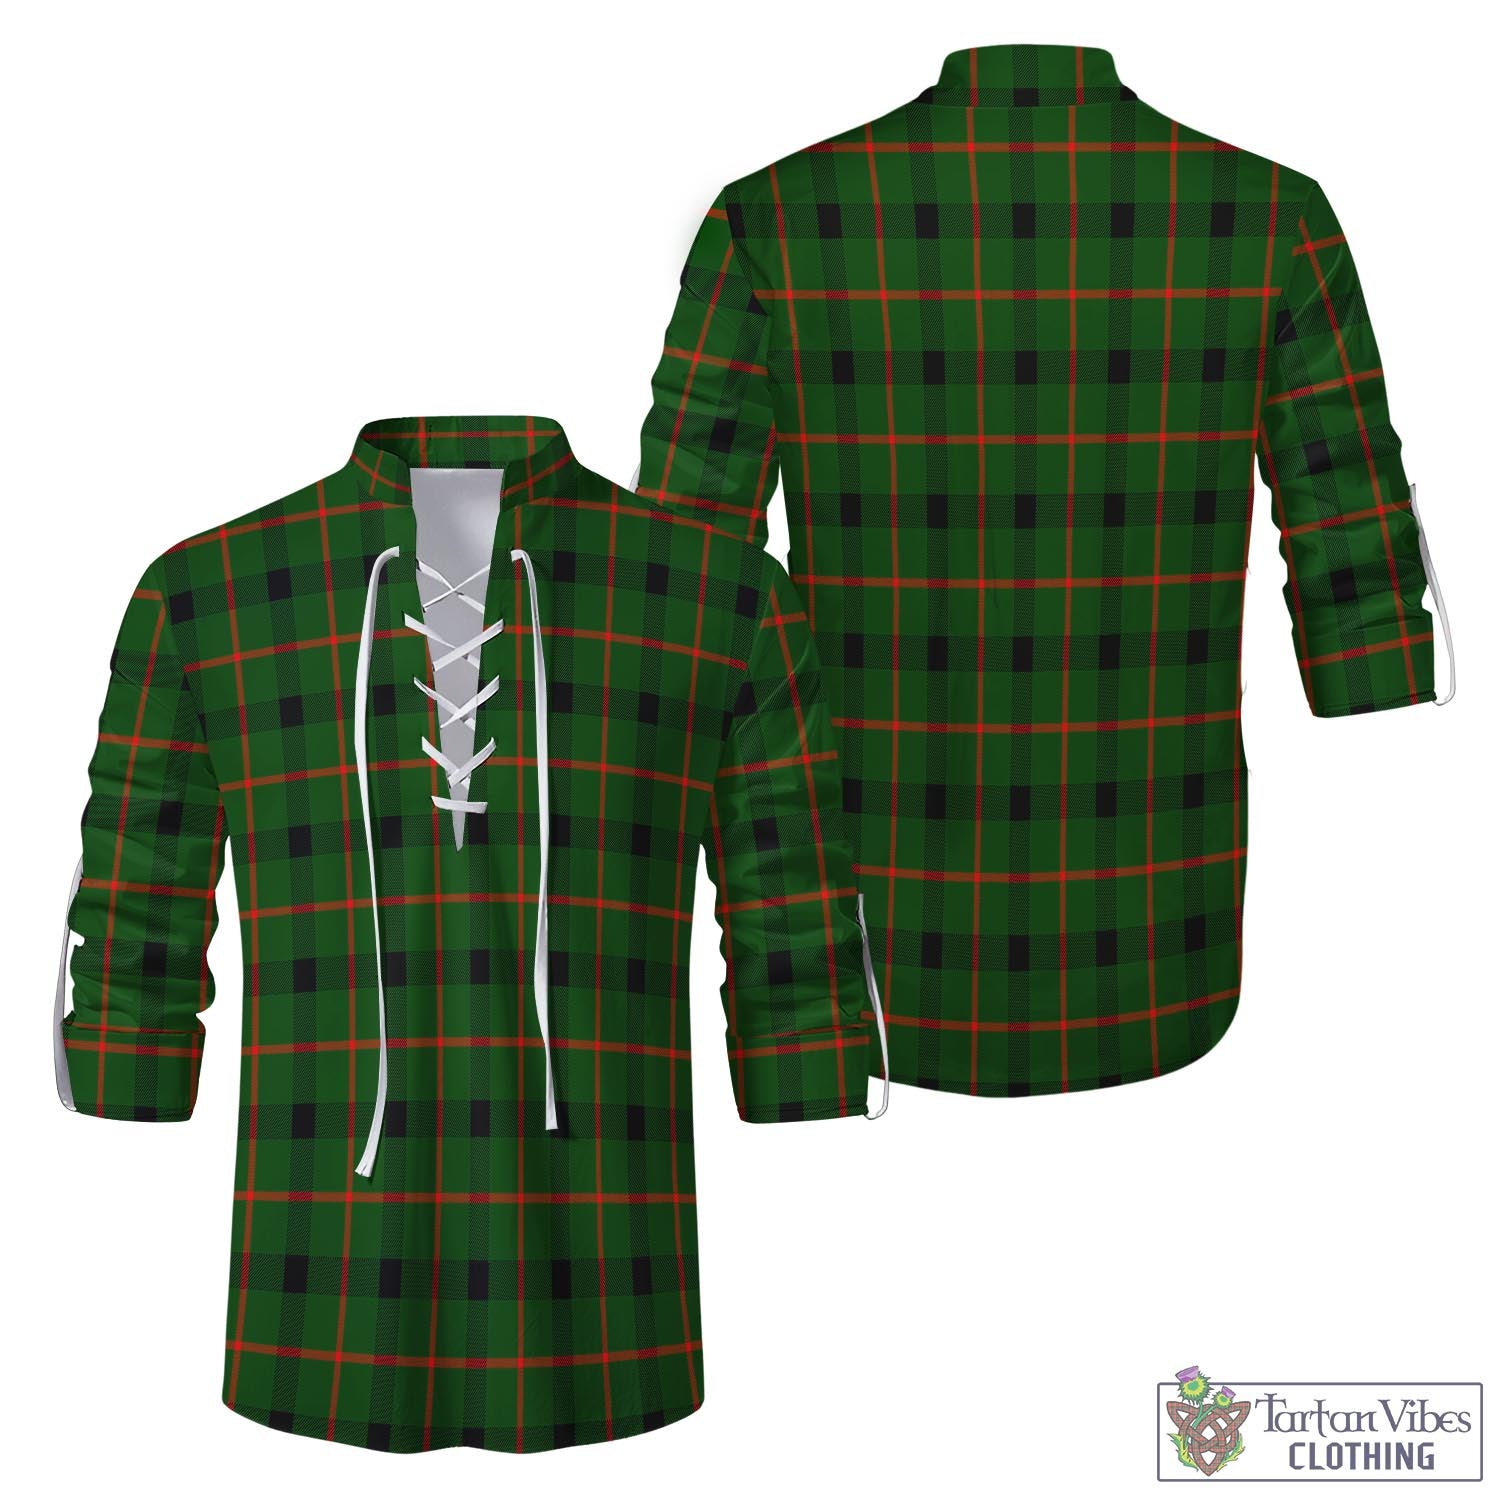 Tartan Vibes Clothing Kincaid Modern Tartan Men's Scottish Traditional Jacobite Ghillie Kilt Shirt